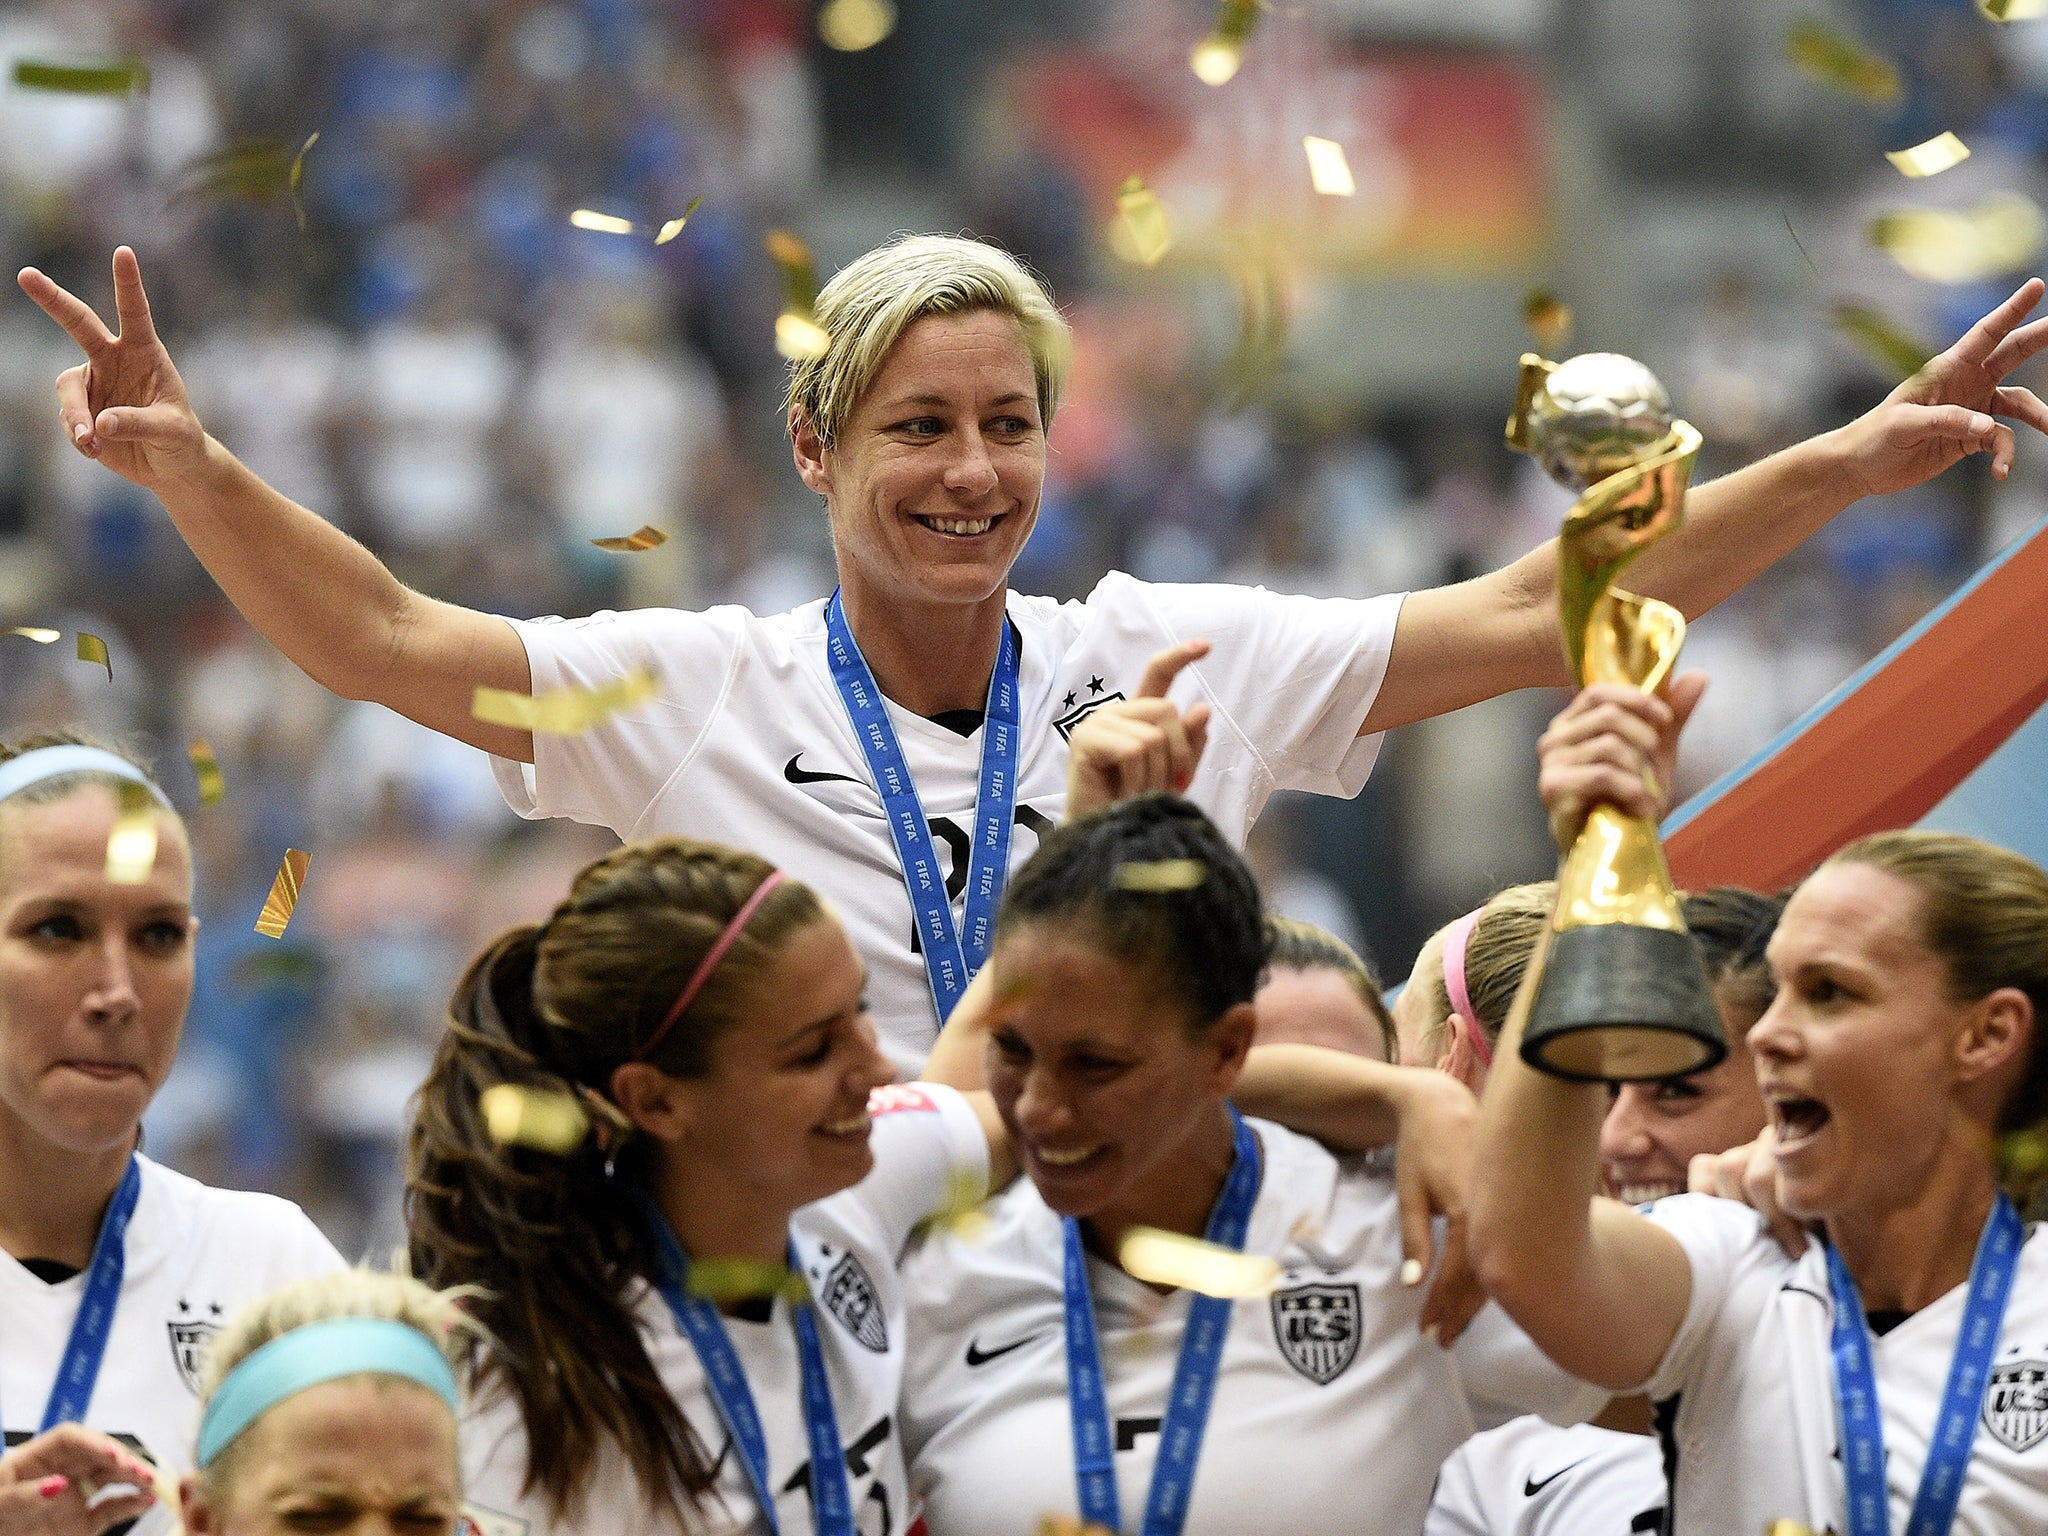 &#13;
Abby Wambach celebrates the World Cup win last summer &#13;